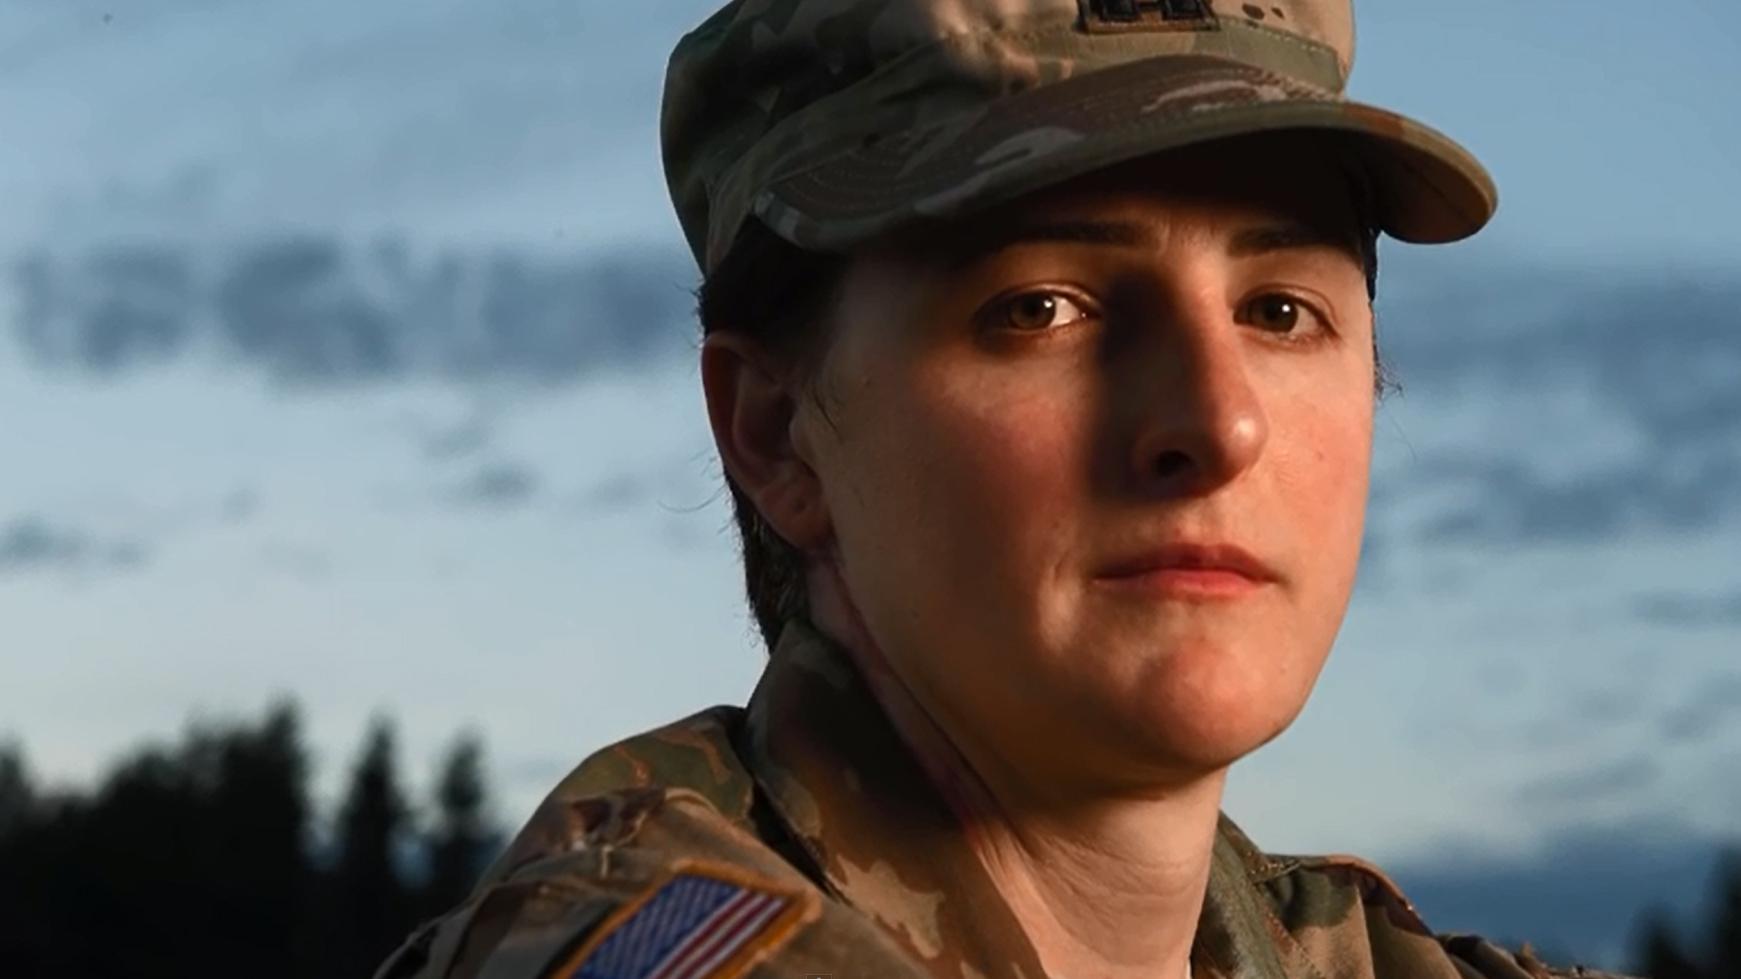 Capt. Jennifer Peace realized she was transgender while serving in Afghanistan.